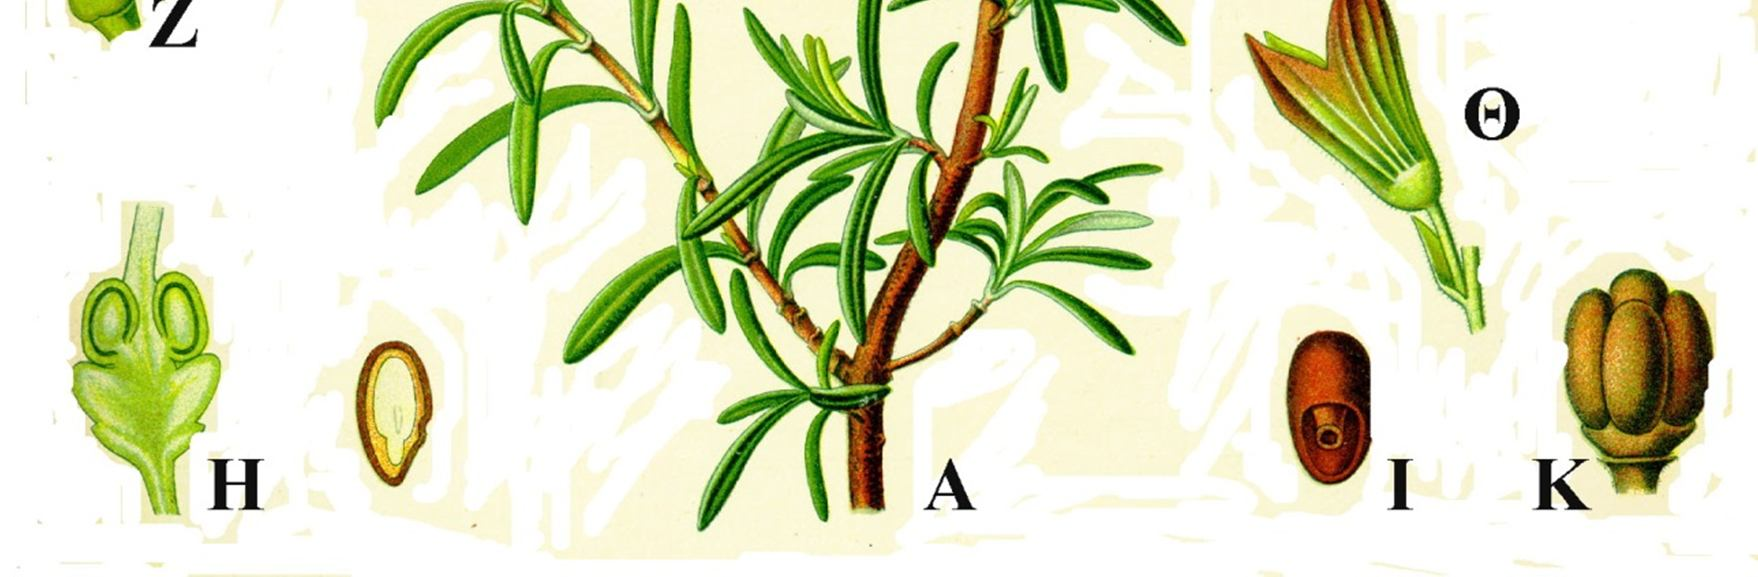 Rosmarinus officinalis: Α: απεικόνιση κλαδιού με φύλλα και άνθη τοποθετημένα κατά σπονδύλους, Β: ζυγόμορφος κάλυκας και στεφάνη, διακρίνονται οι επιπέπαλοι στήμονες, ο γυνοβασικός στύλος και τα